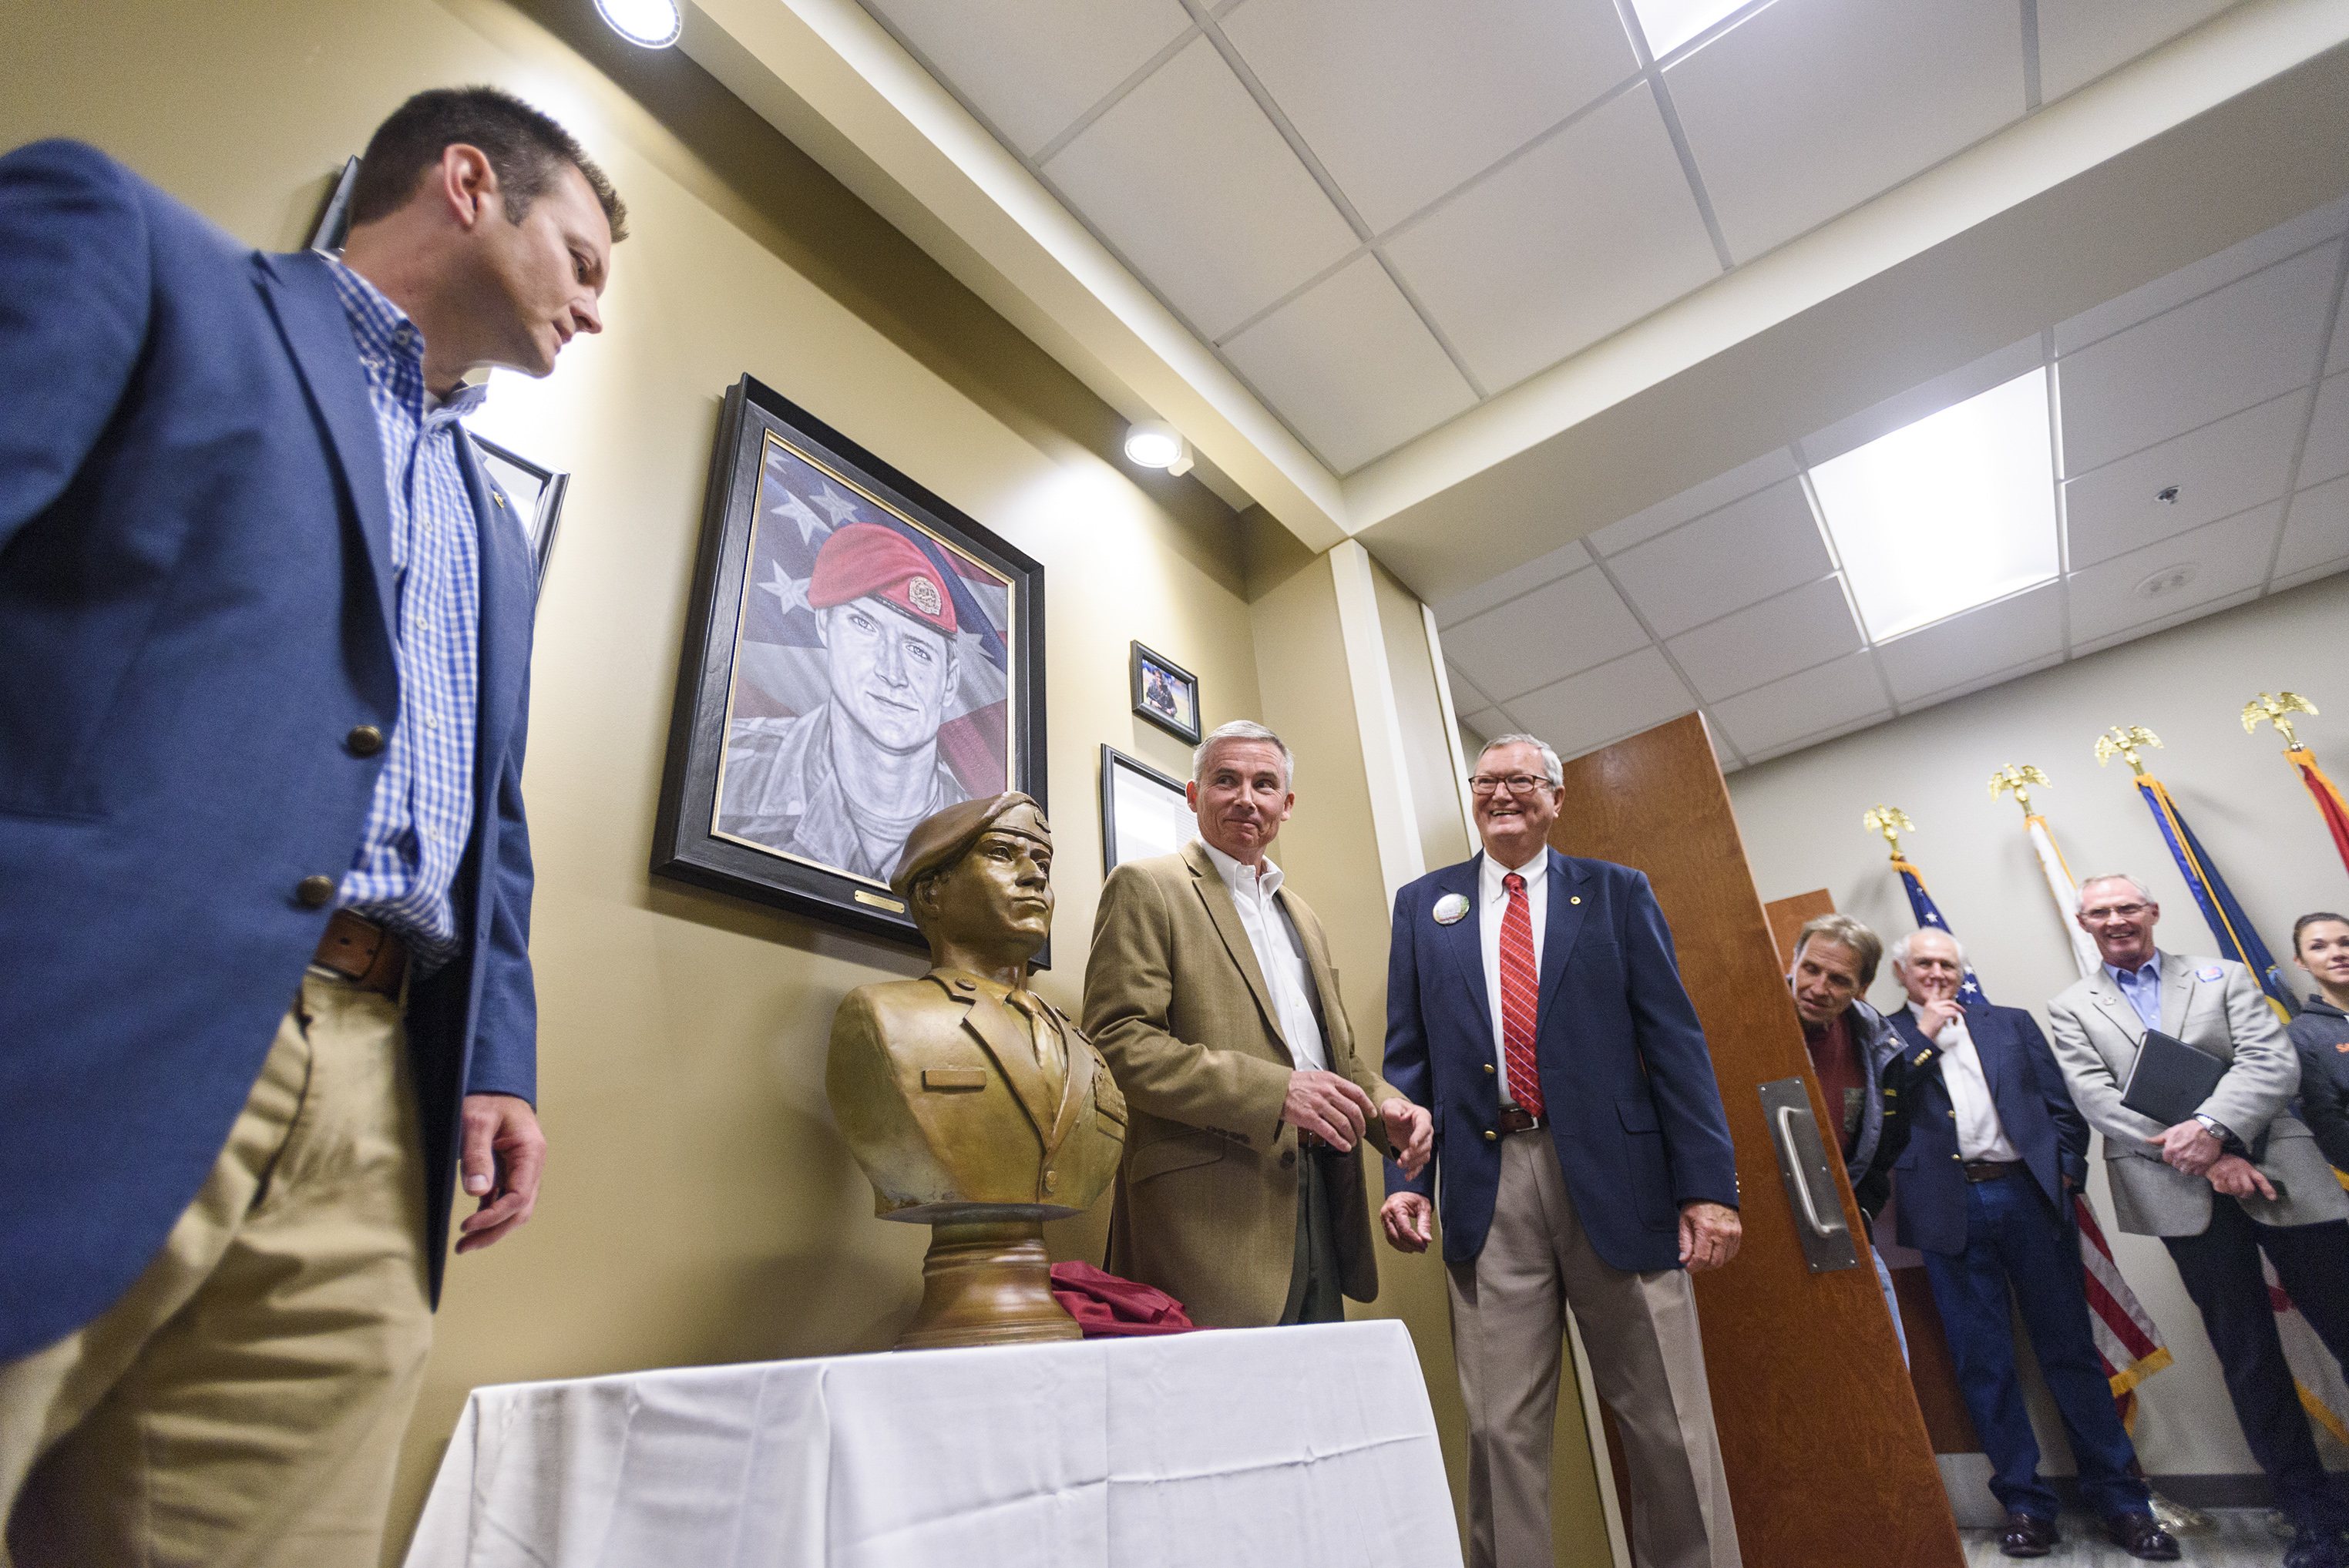 UA Alumnus, Late Air Force Vet Honored with Bronzed Memorial